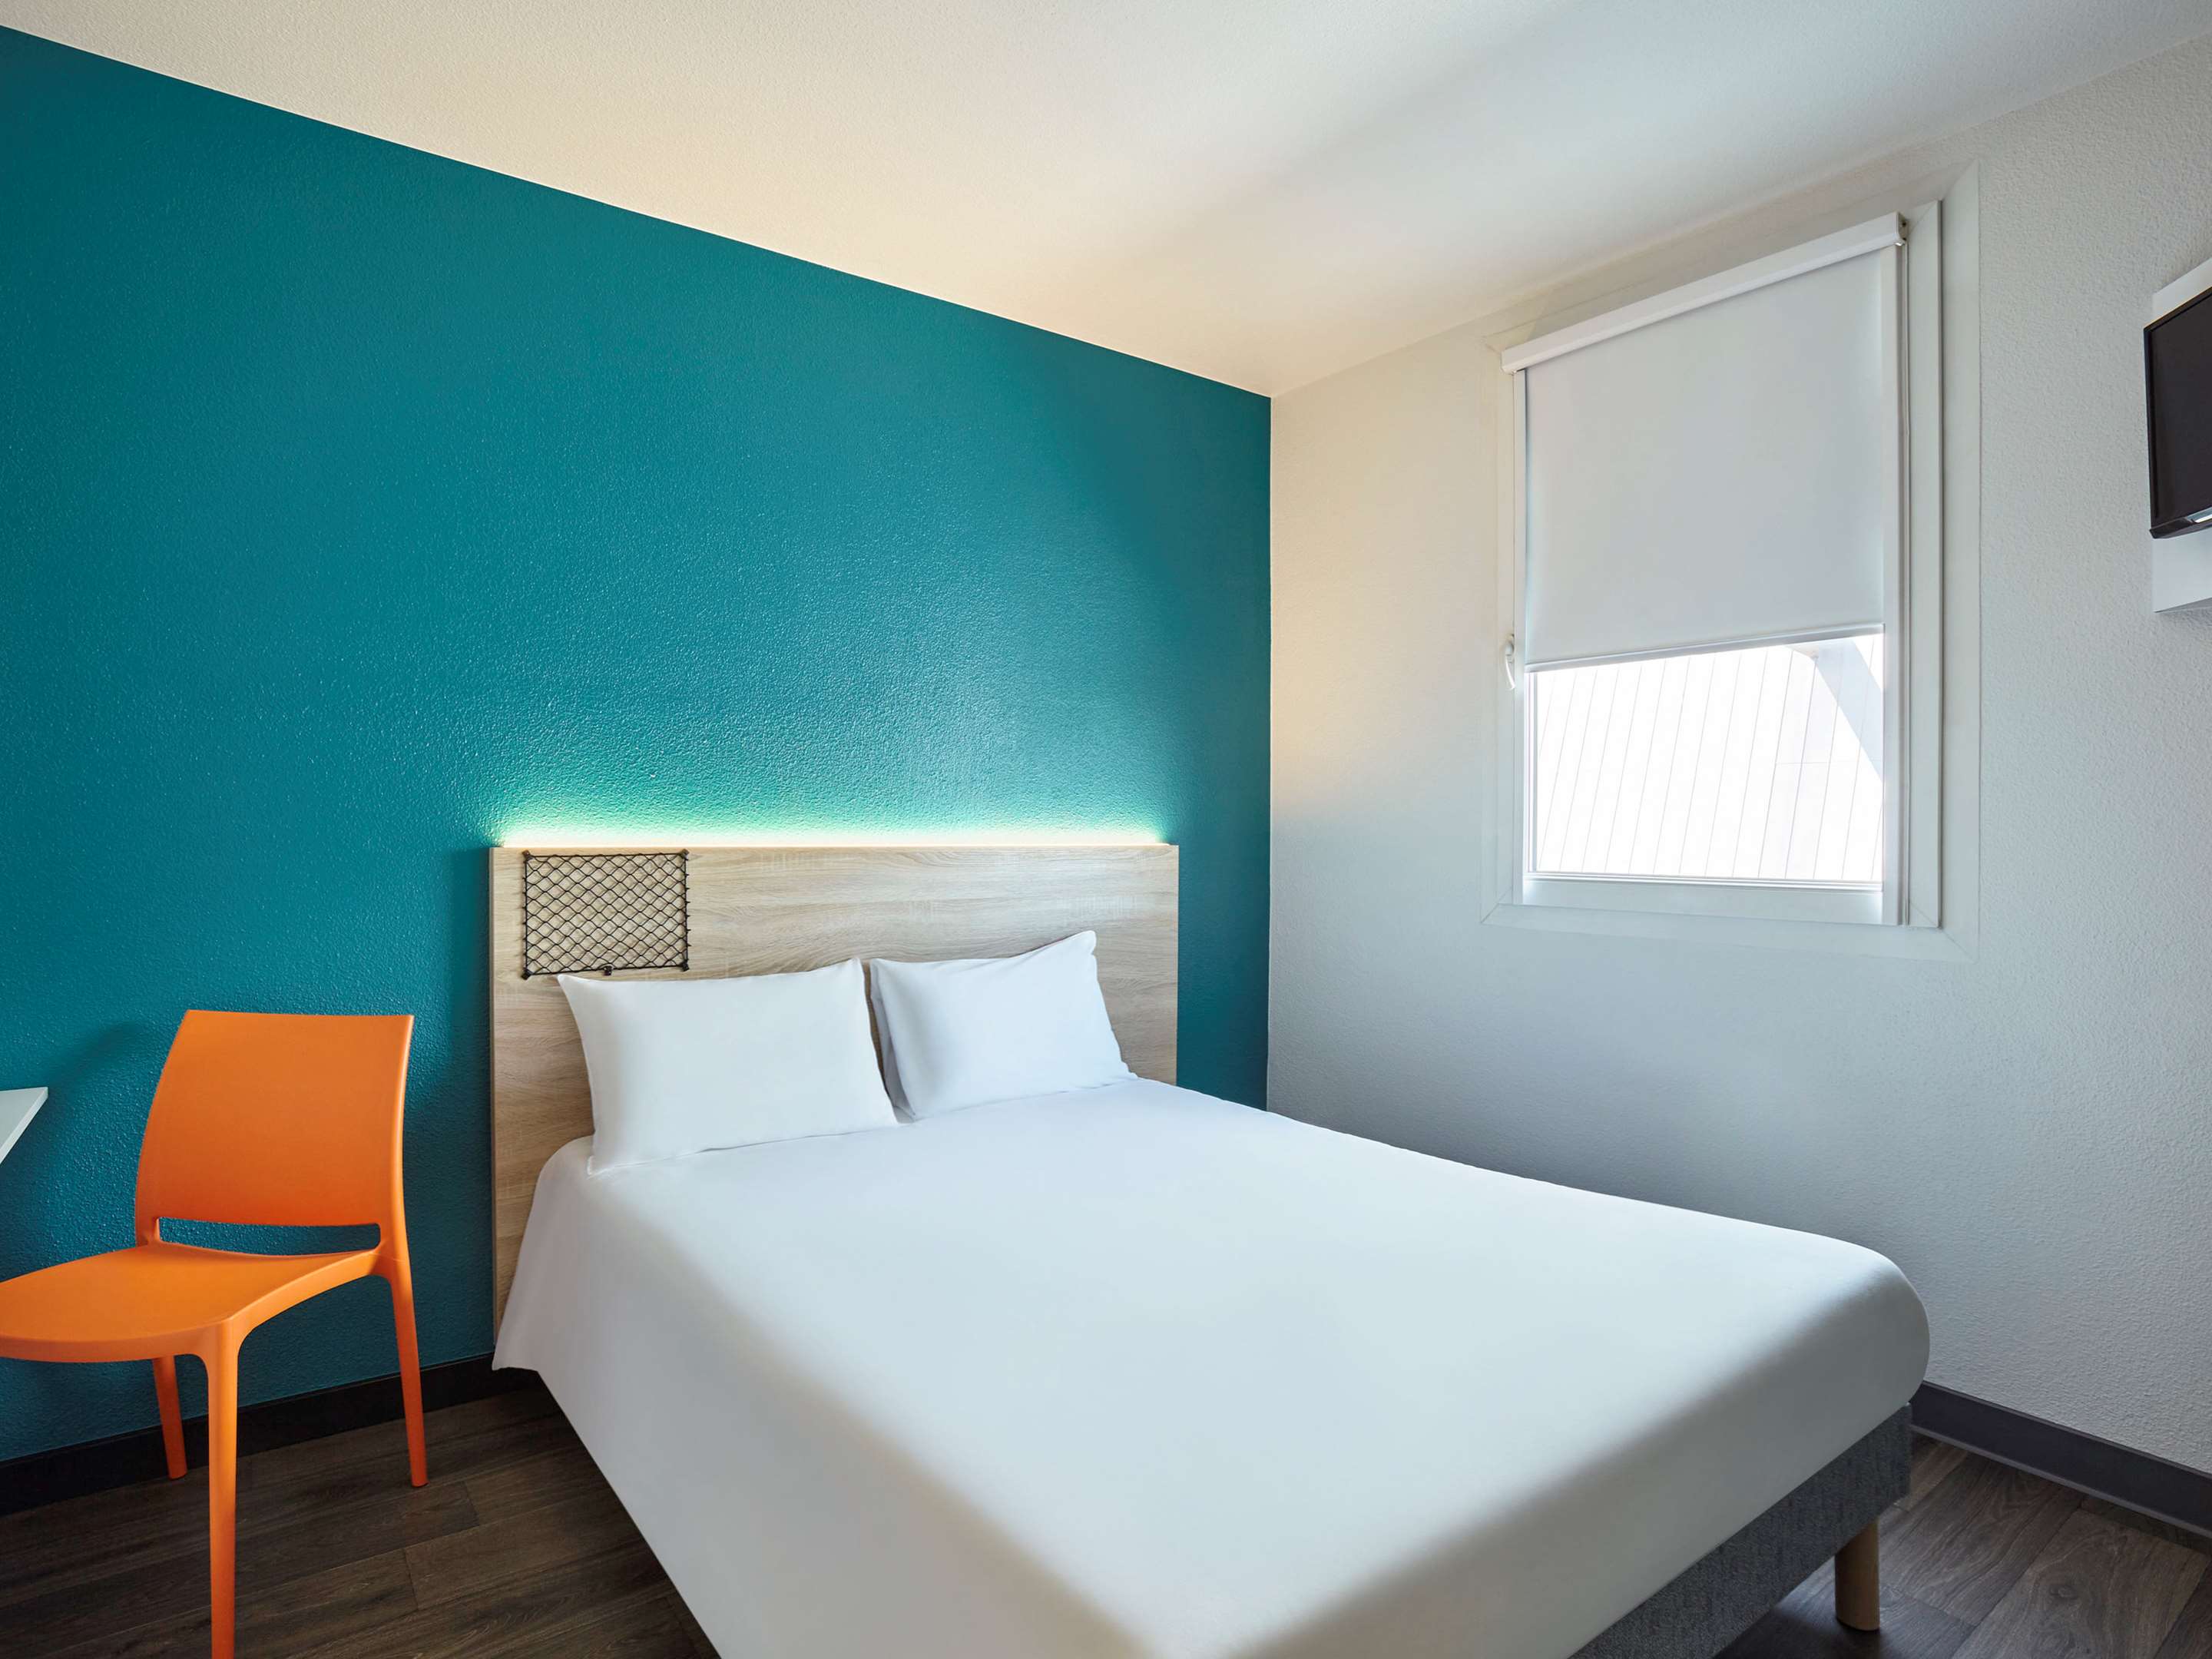 hotelF1 Paris Porte de Châtillon-Paris Updated 2023 Room Price-Reviews &  Deals | Trip.com